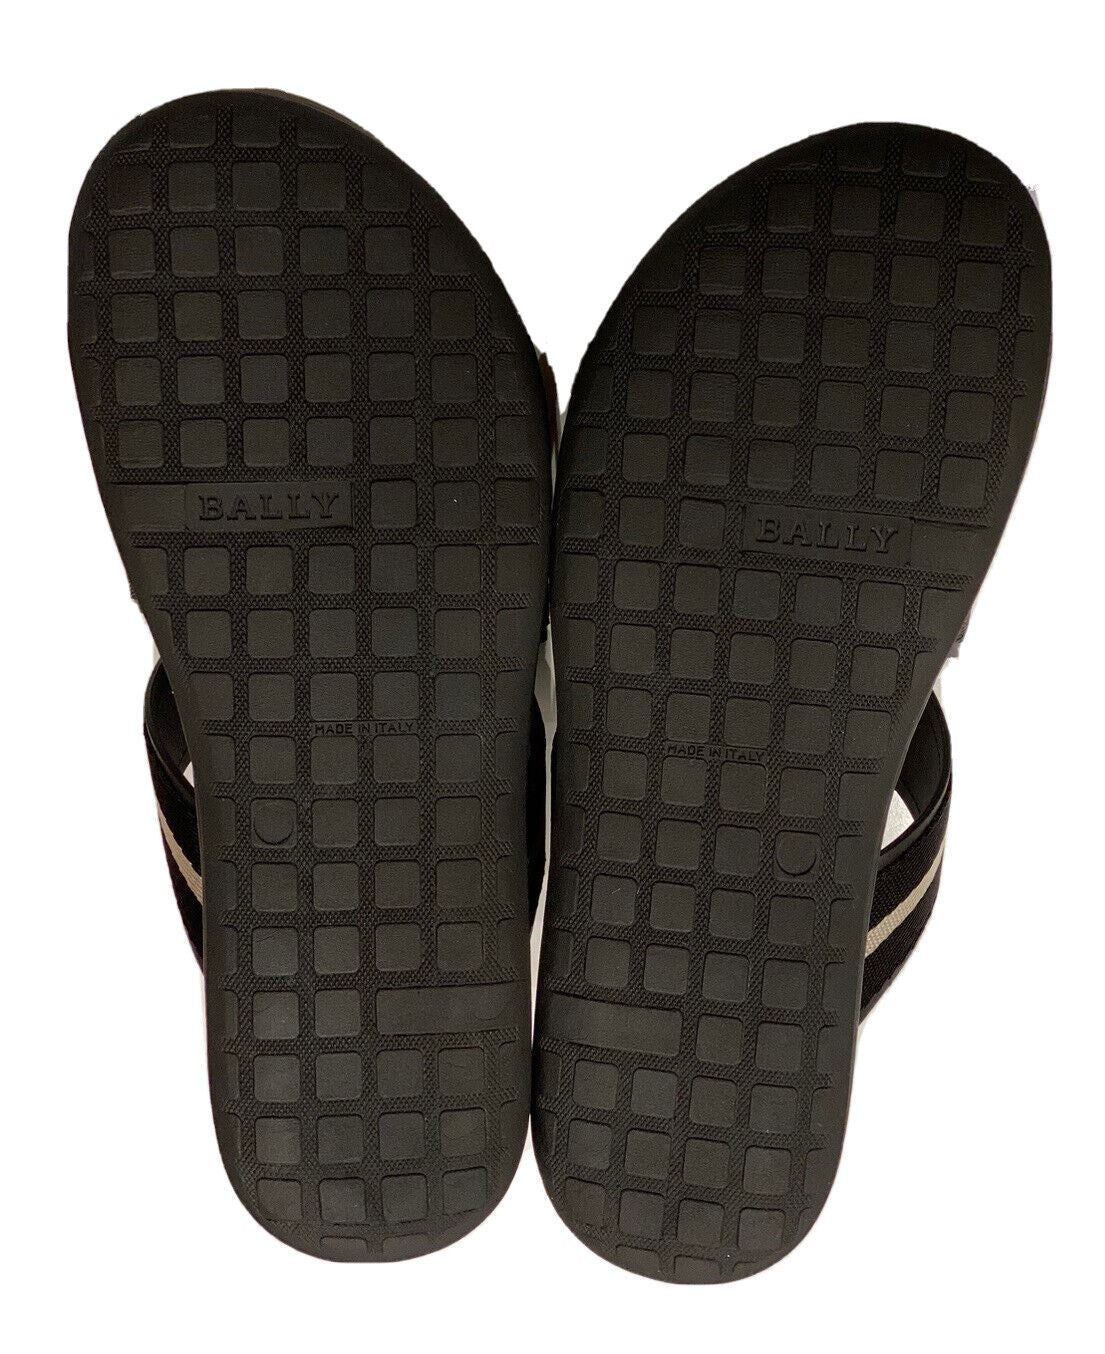 NIB $450 Bally Men's Sasha Slide Textile and Leather Black Sandals 9 US 6234150